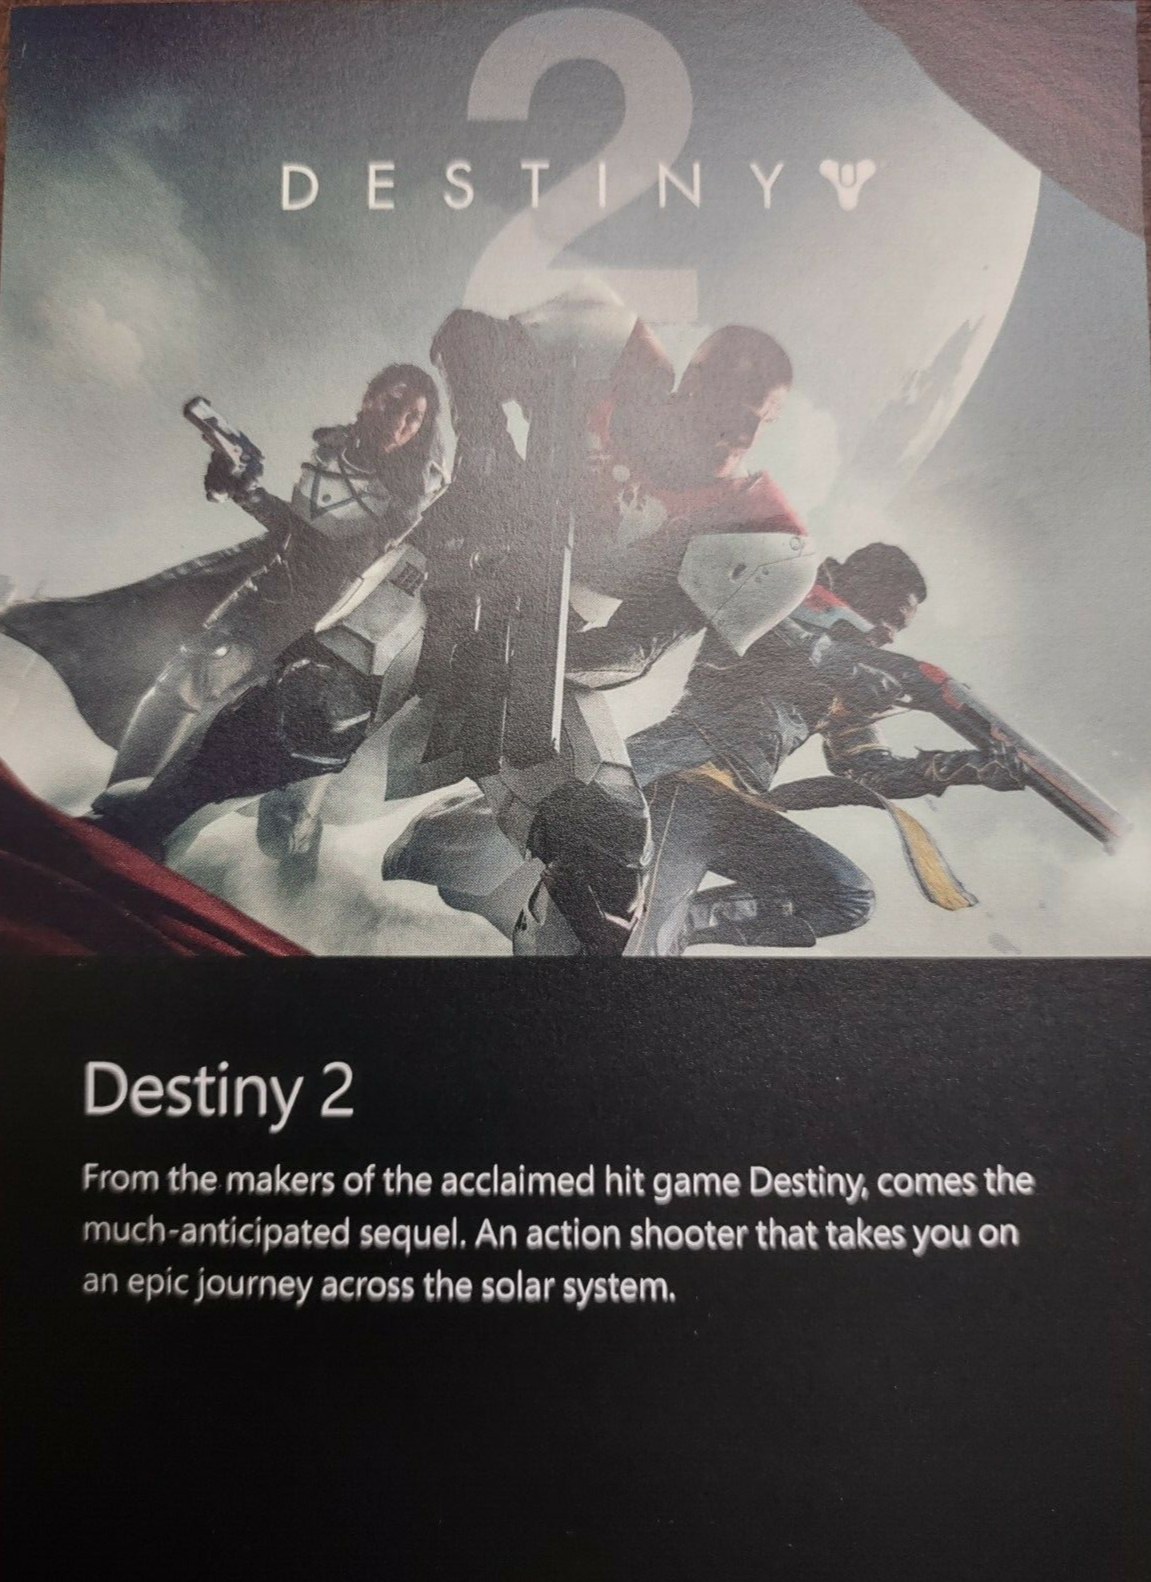 Daarbij man Buitenboordmotor Destiny 2 Game Download DLC Xbox One - No Disc Included - EM@IL ONLY | eBay